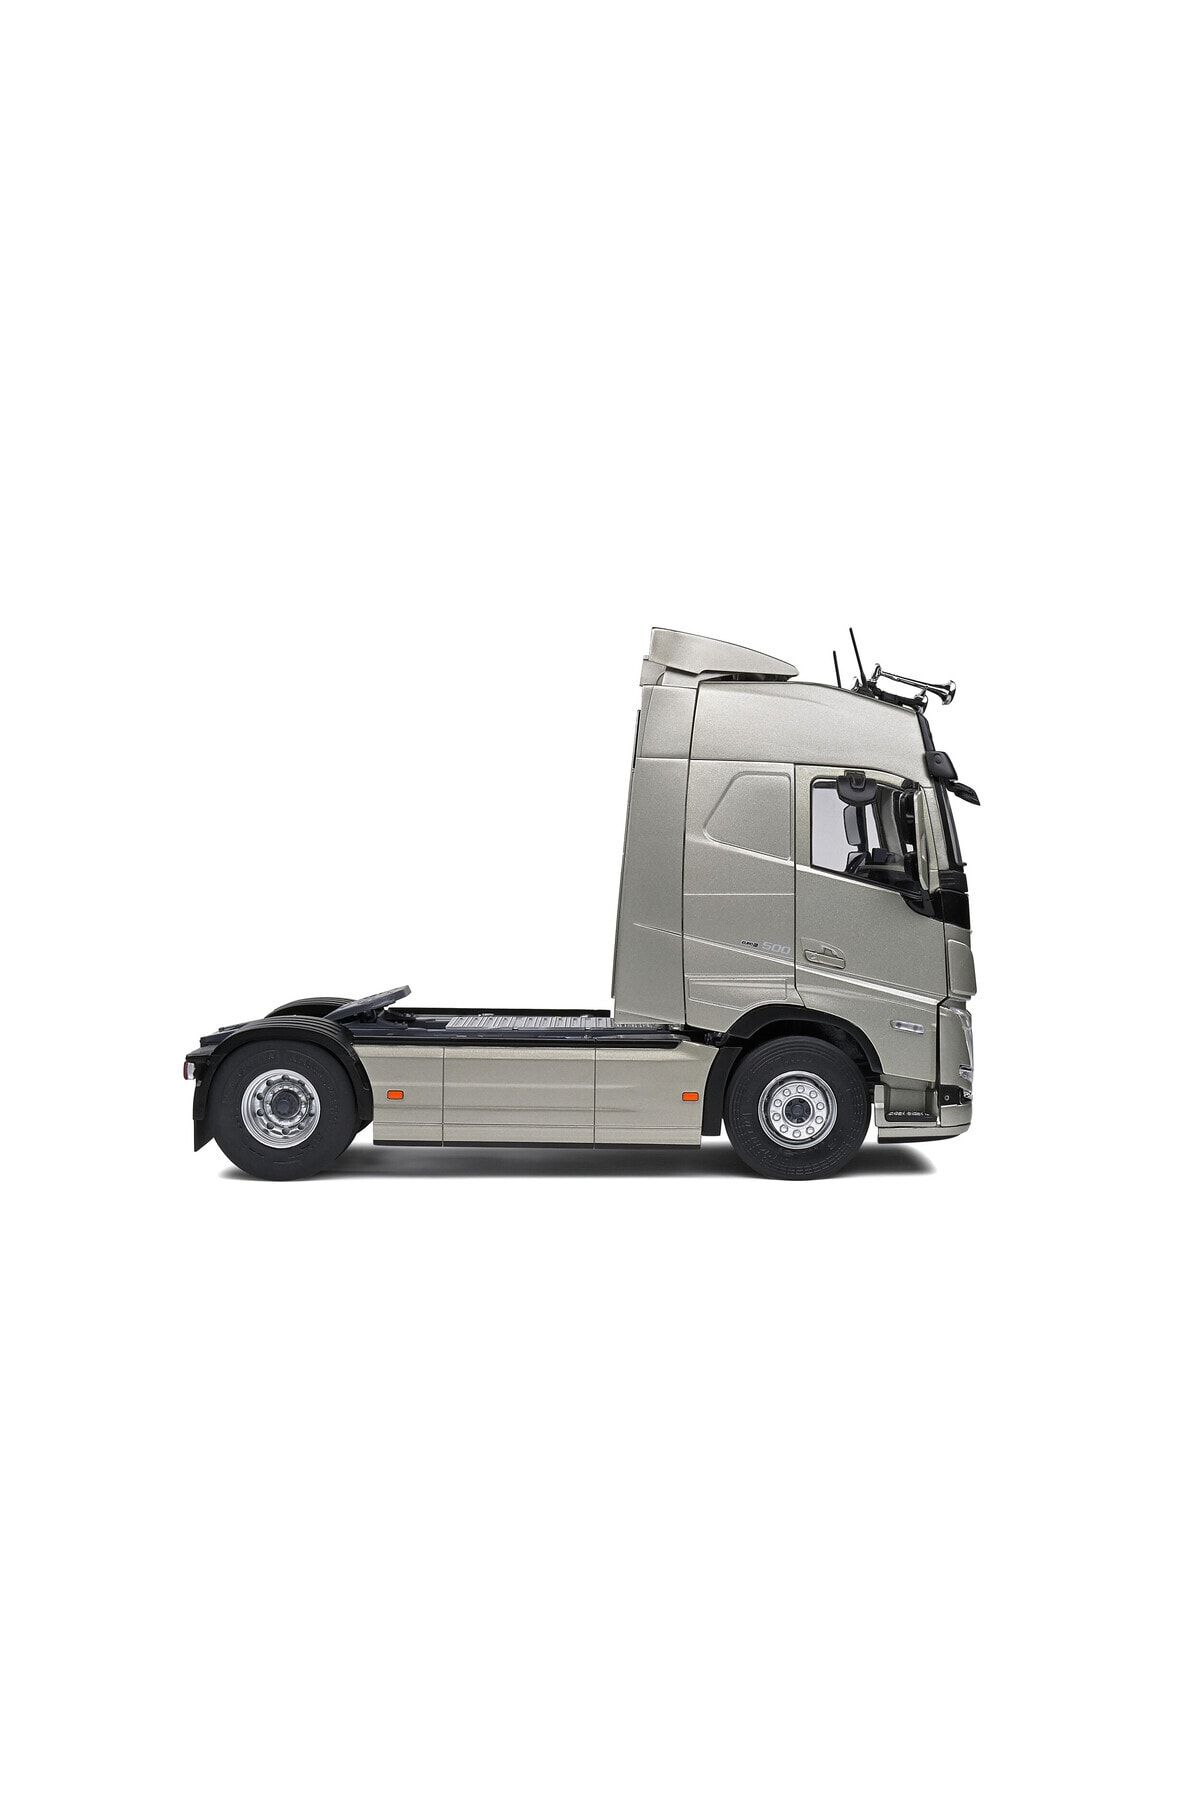 Volvo Trucks FH Globetrotter XL - Nordic Light - 2021 - Solido